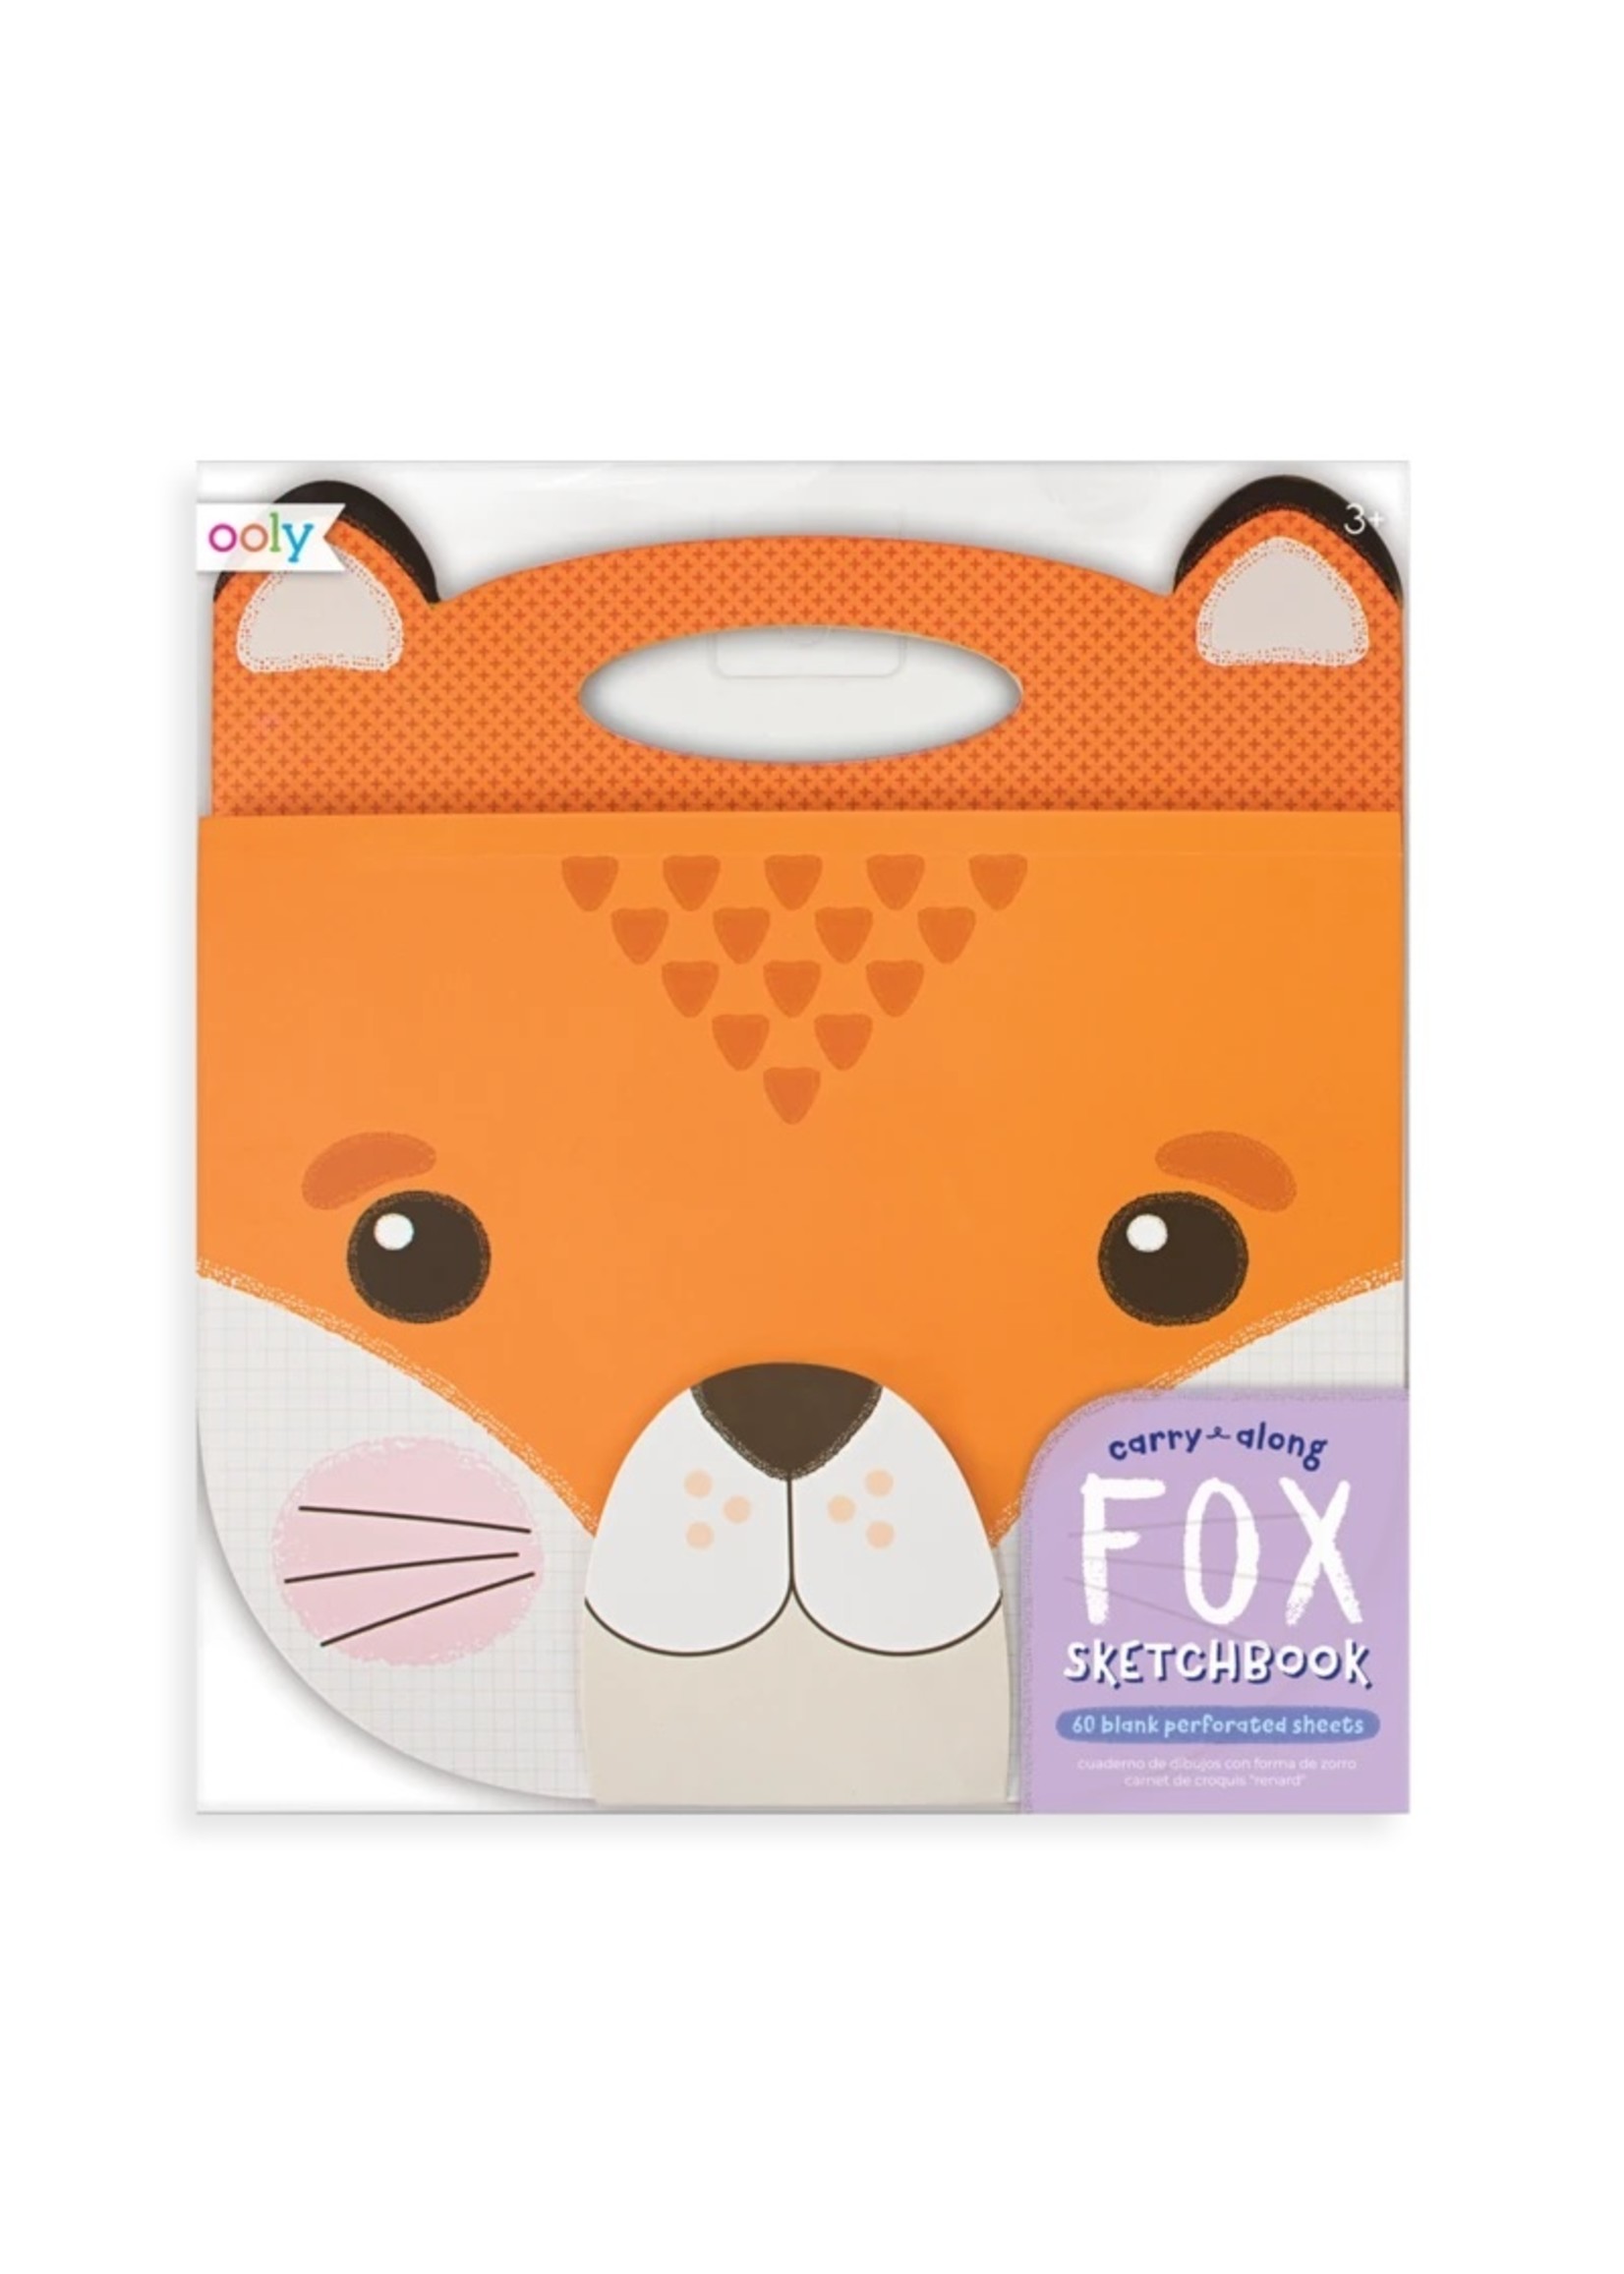 Ooly Carry Along Sketchbook - Fox